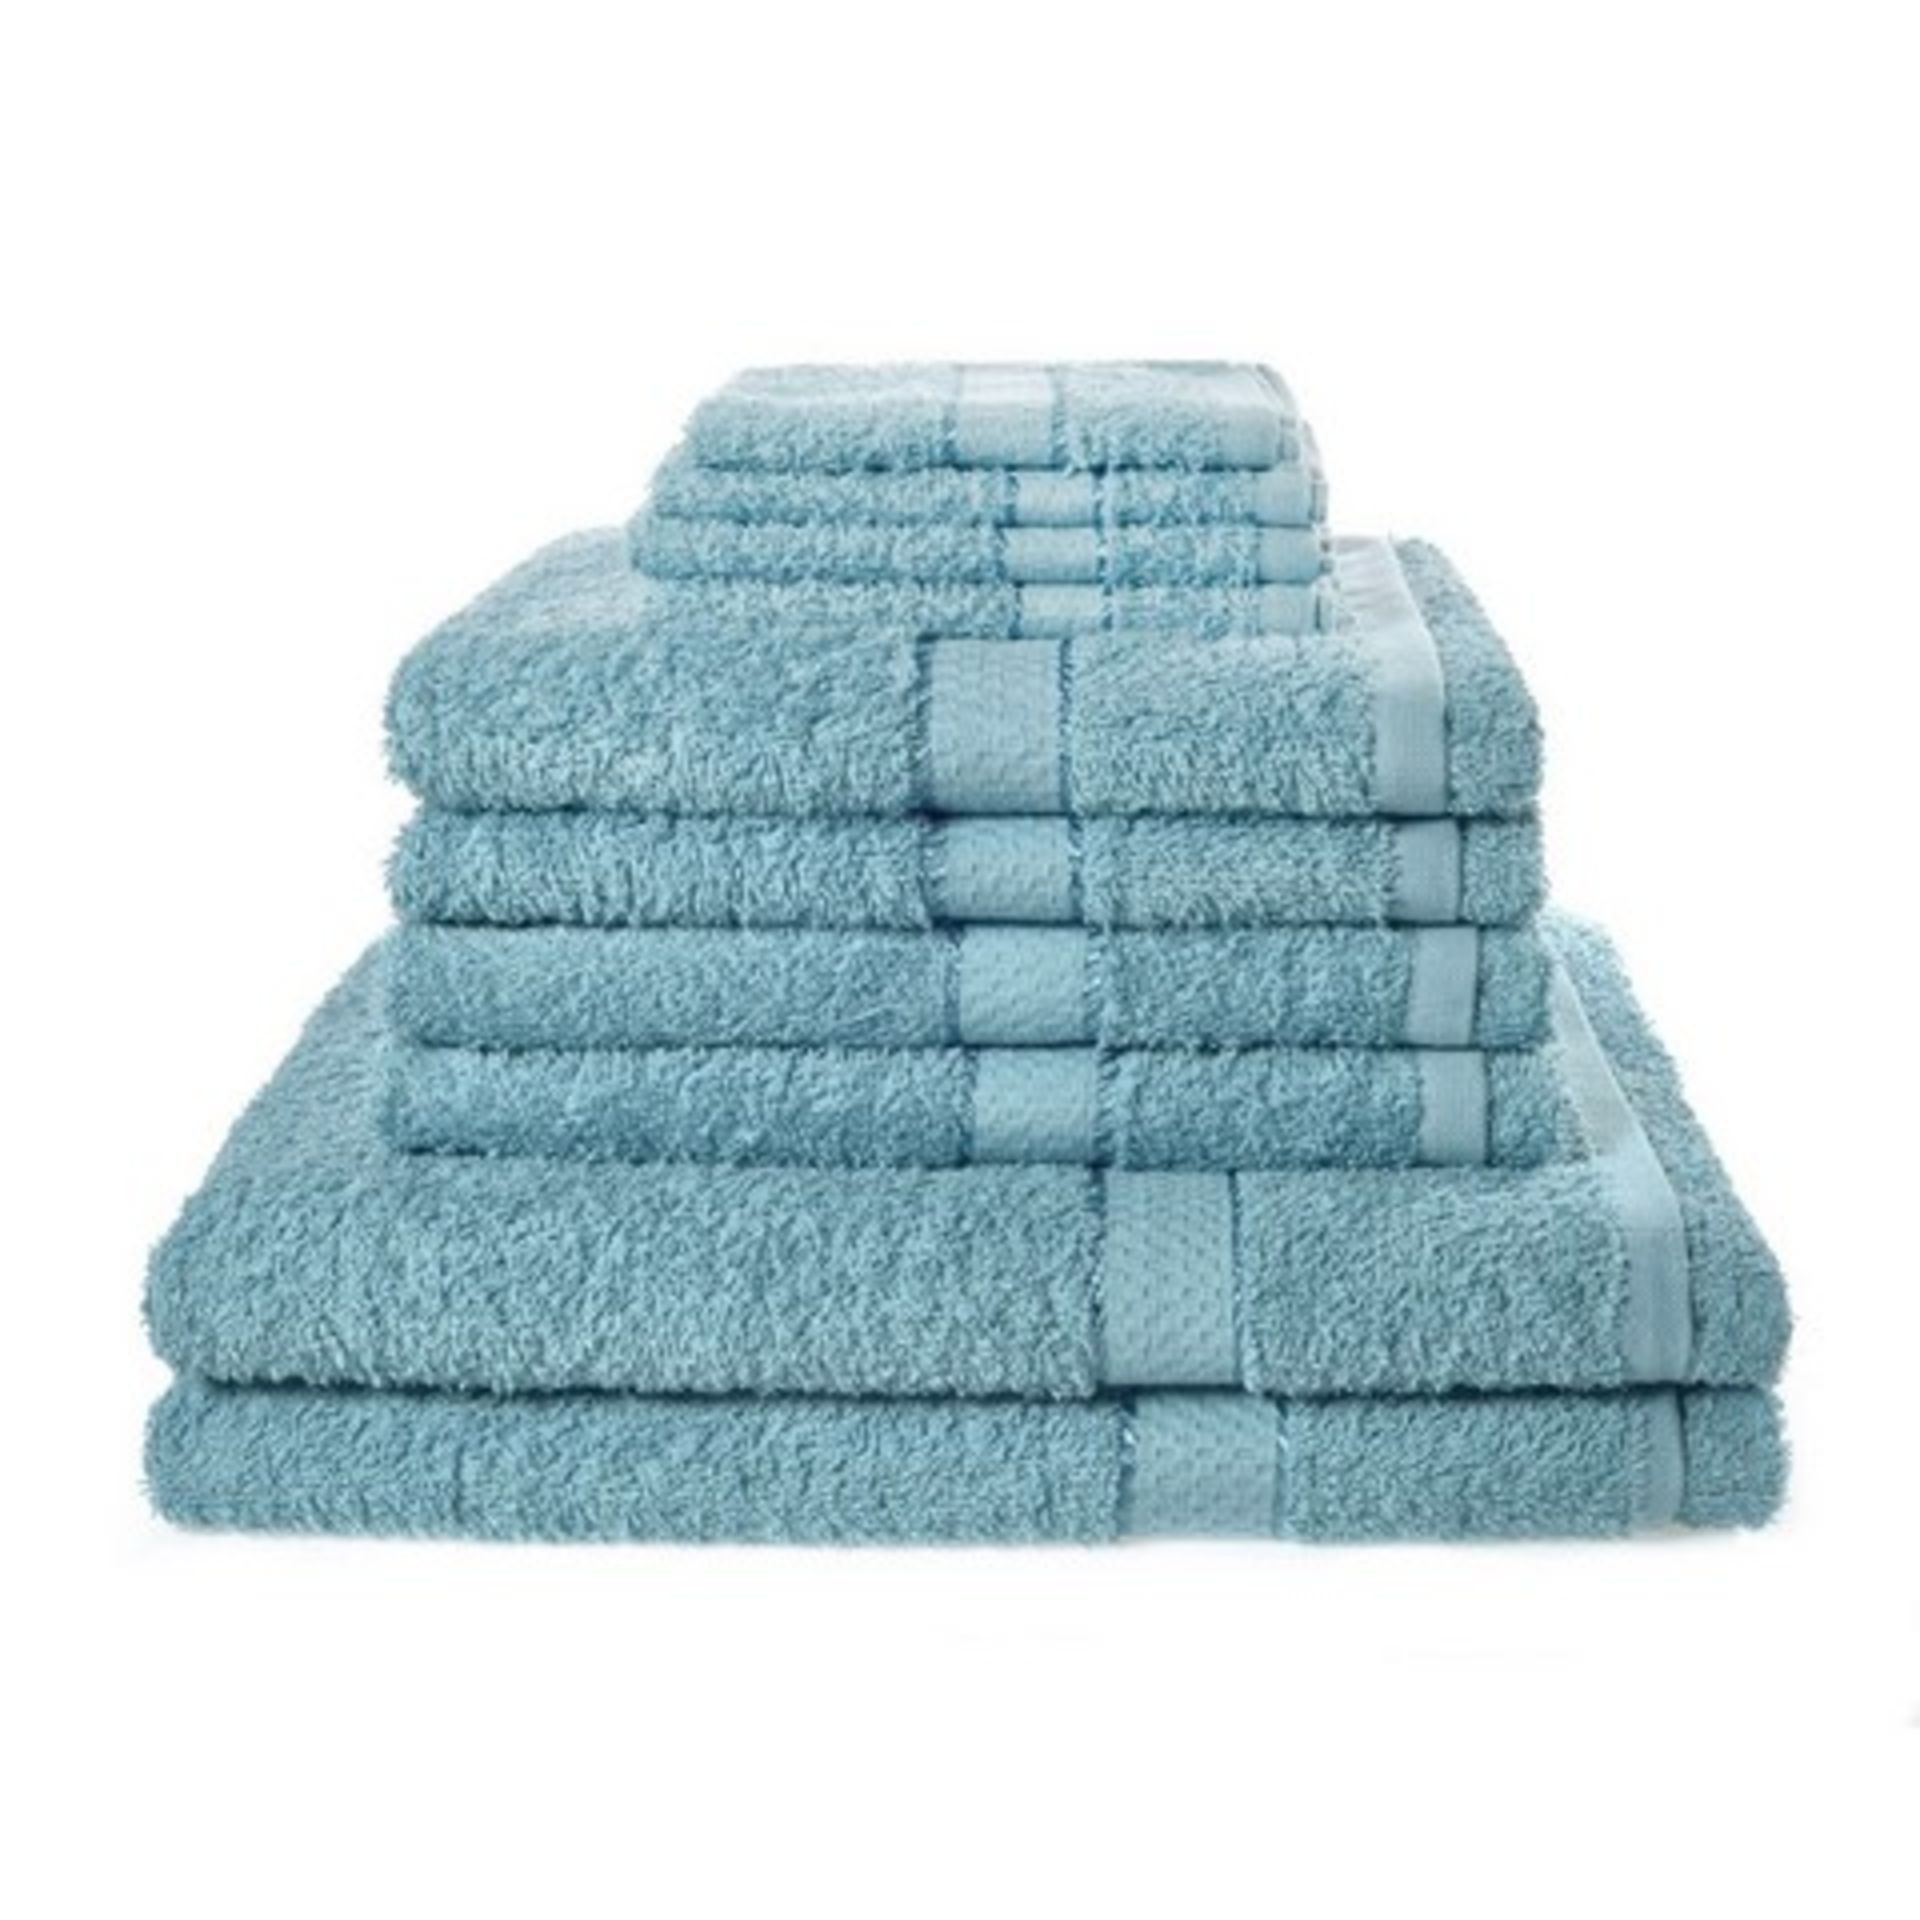 V Brand New Luxury 10 Piece Aqua Towel Bale Set Including 4 Face Cloths - 4 Hand Towels - 2 Bath - Image 2 of 2